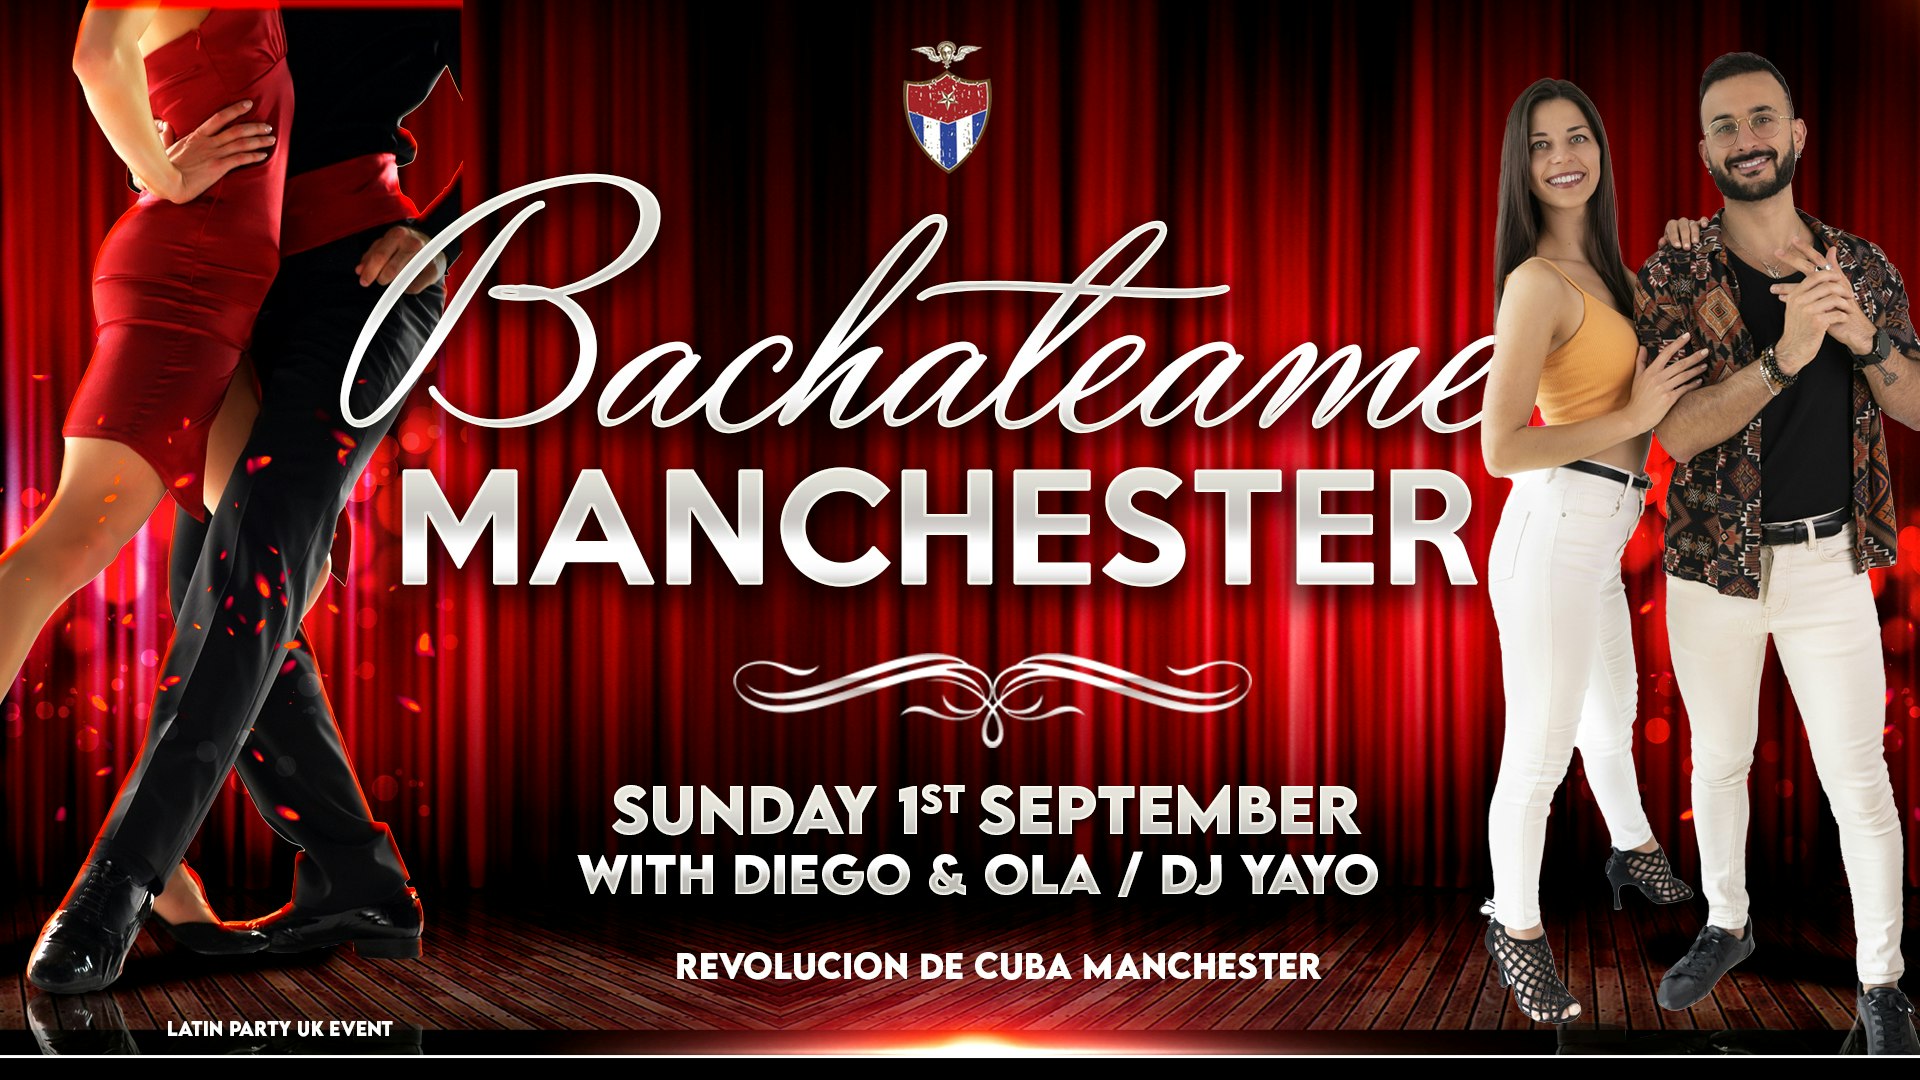 Bachateame Manchester – Sunday 1st September | Revolucion De Cuba